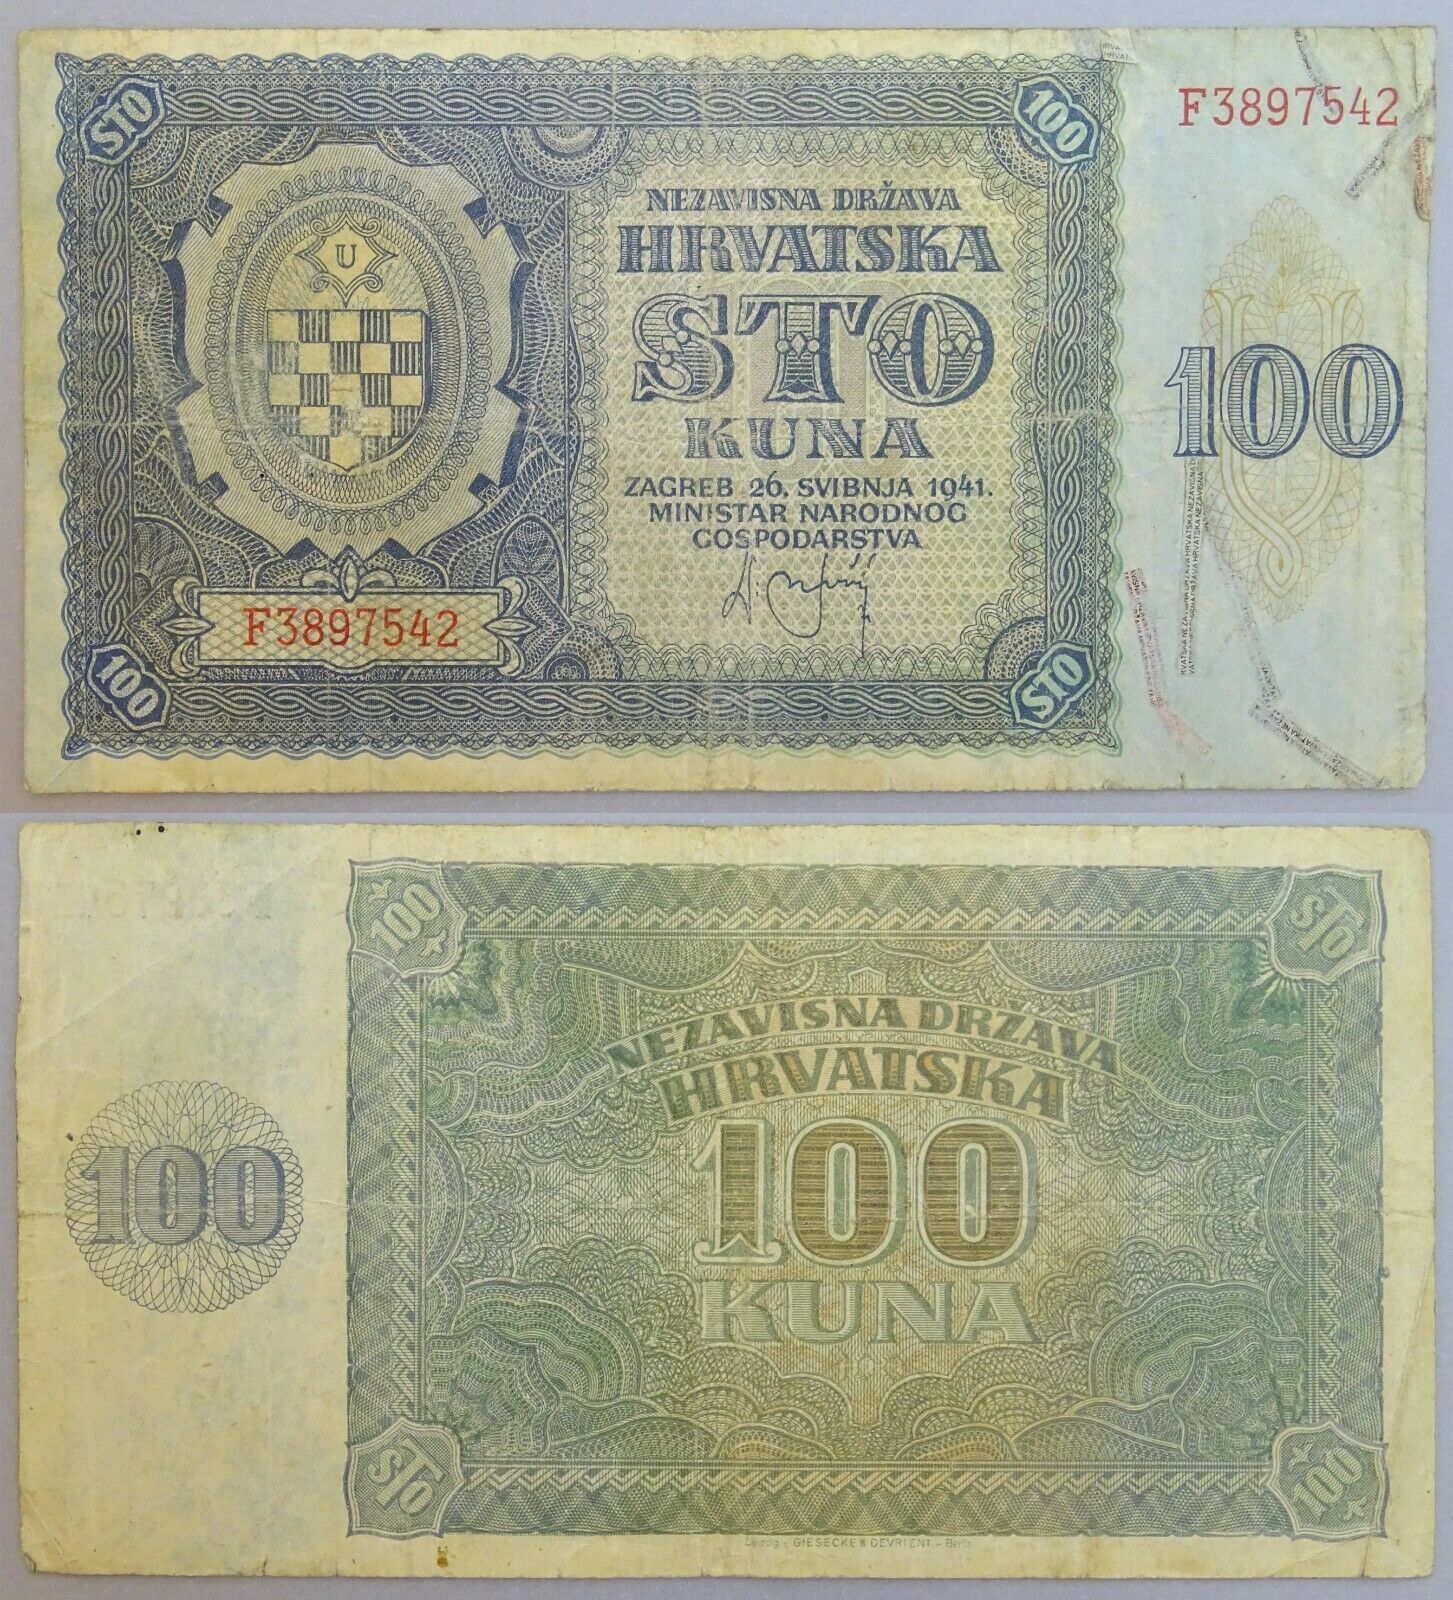 1941 Wwii Croatia Ndh 100 Kuna Paper Money Banknote German Nazi Occupation